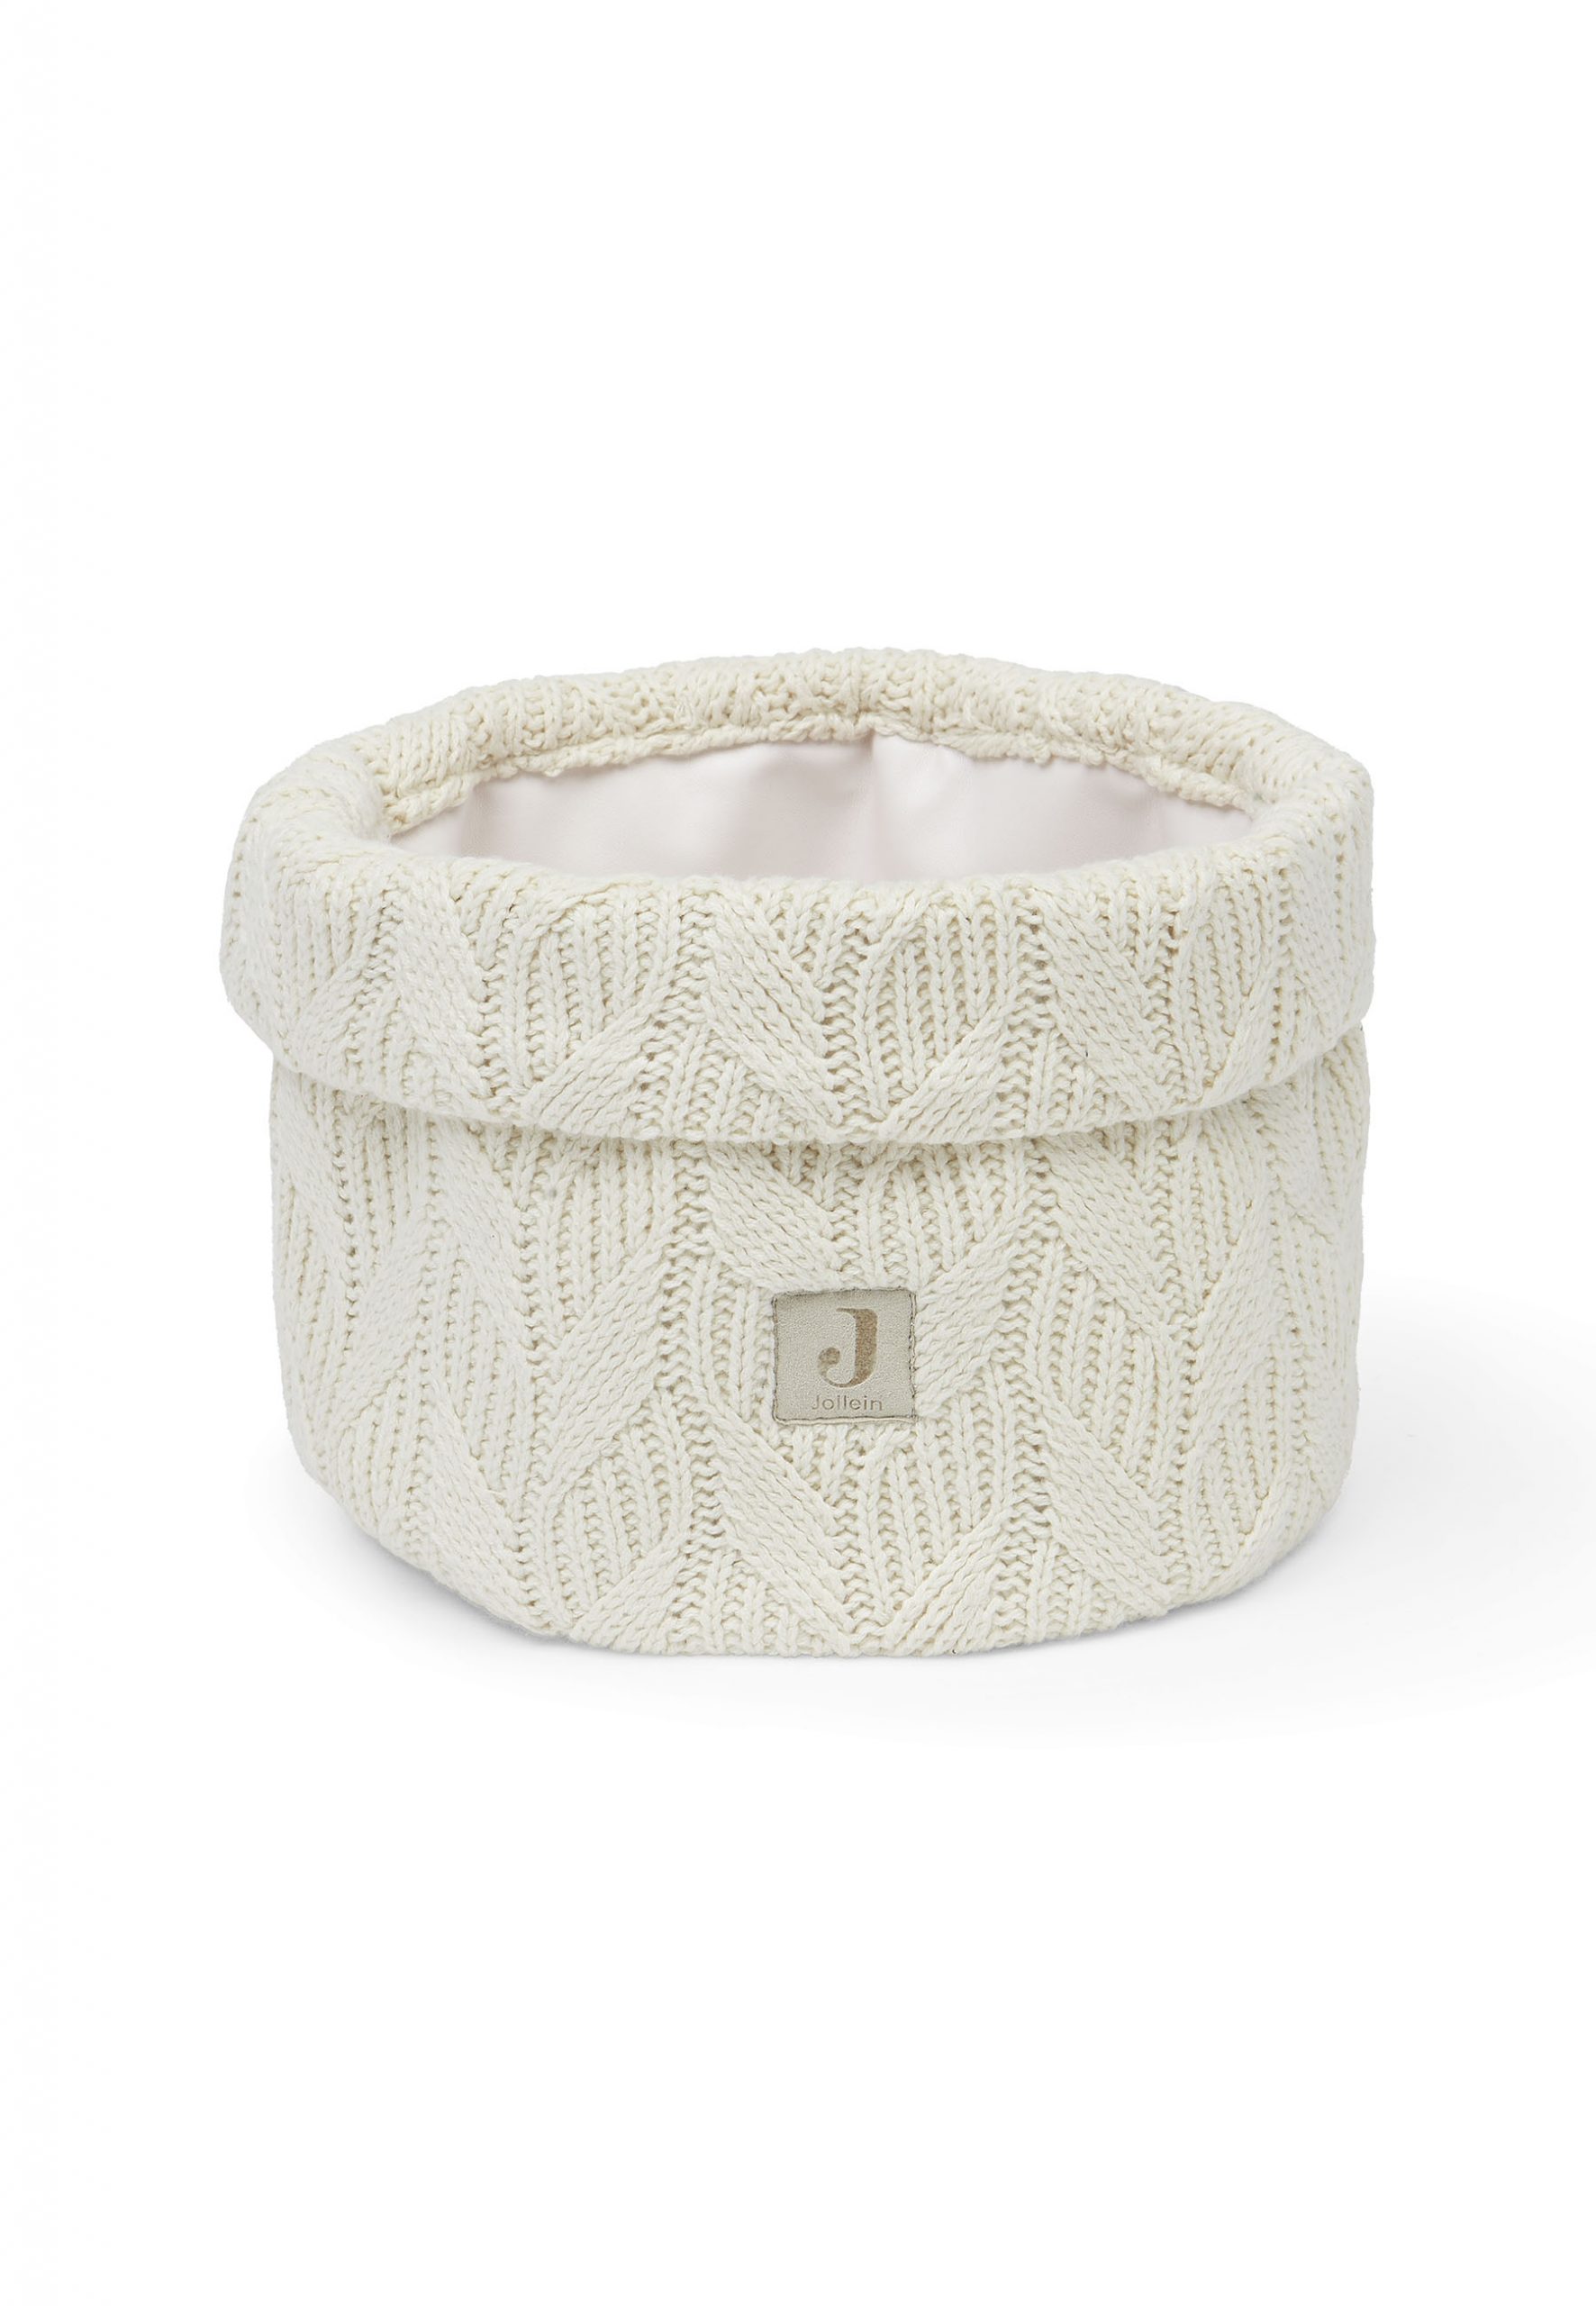 JOLLEIN – Panier de rangement Spring knit ivoire